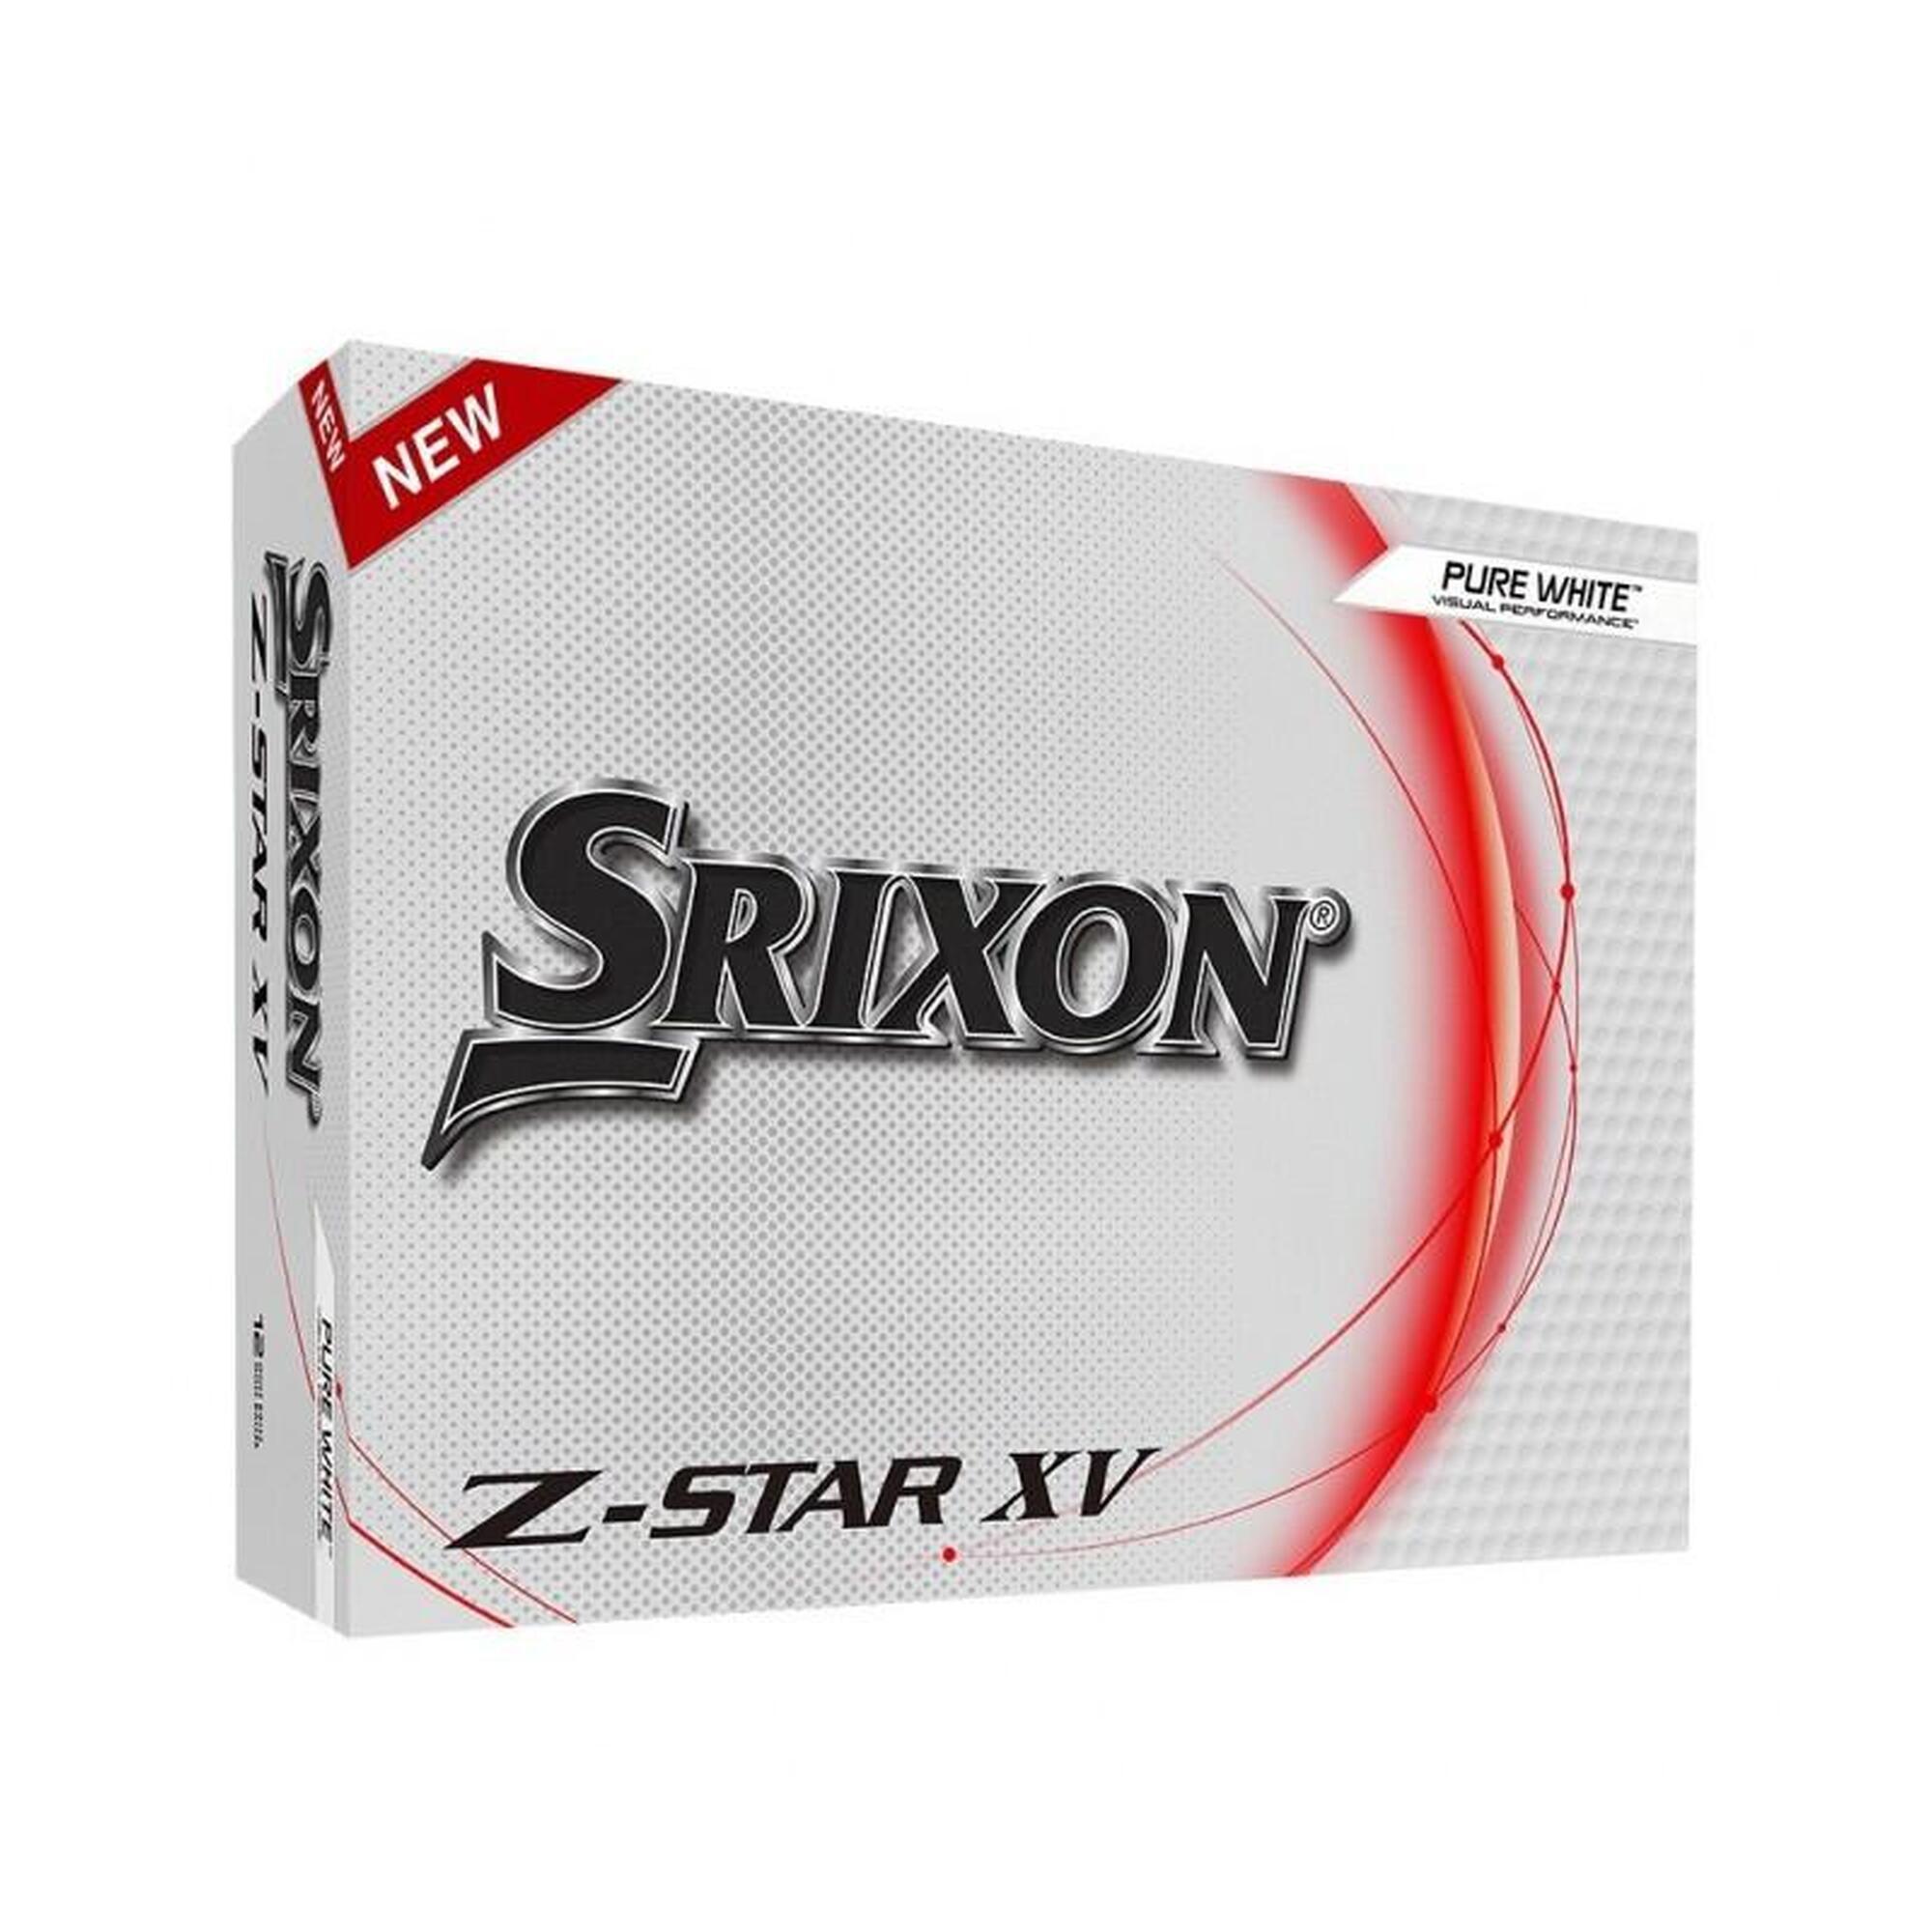 Bolas de golf Srixon Z-Star XV New